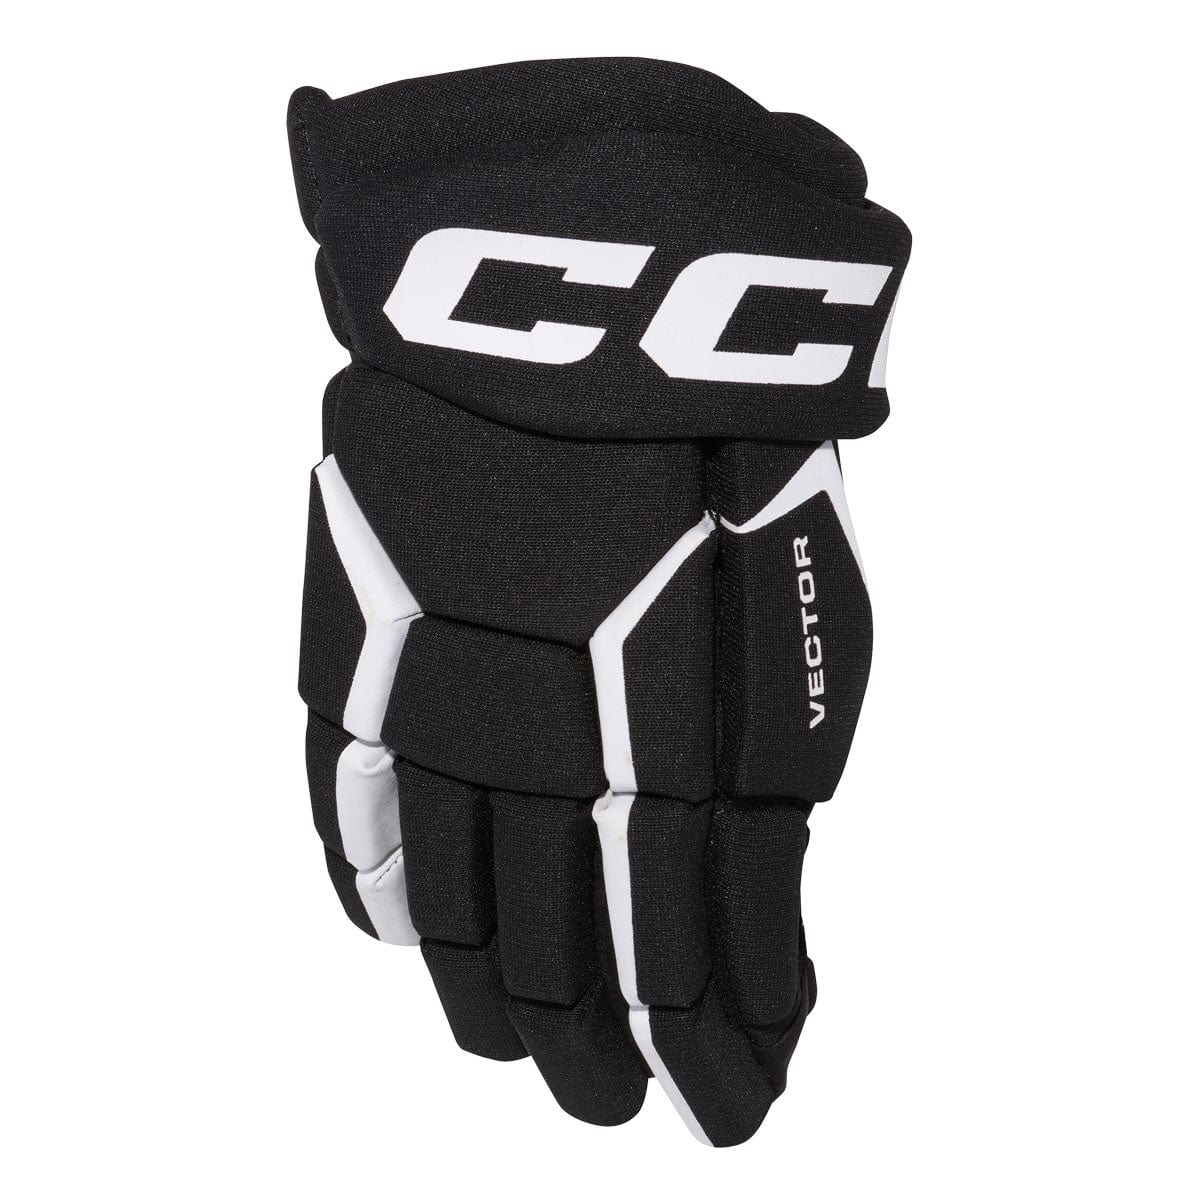 CCM Tacks Vector Junior Hockey Gloves - The Hockey Shop Source For Sports